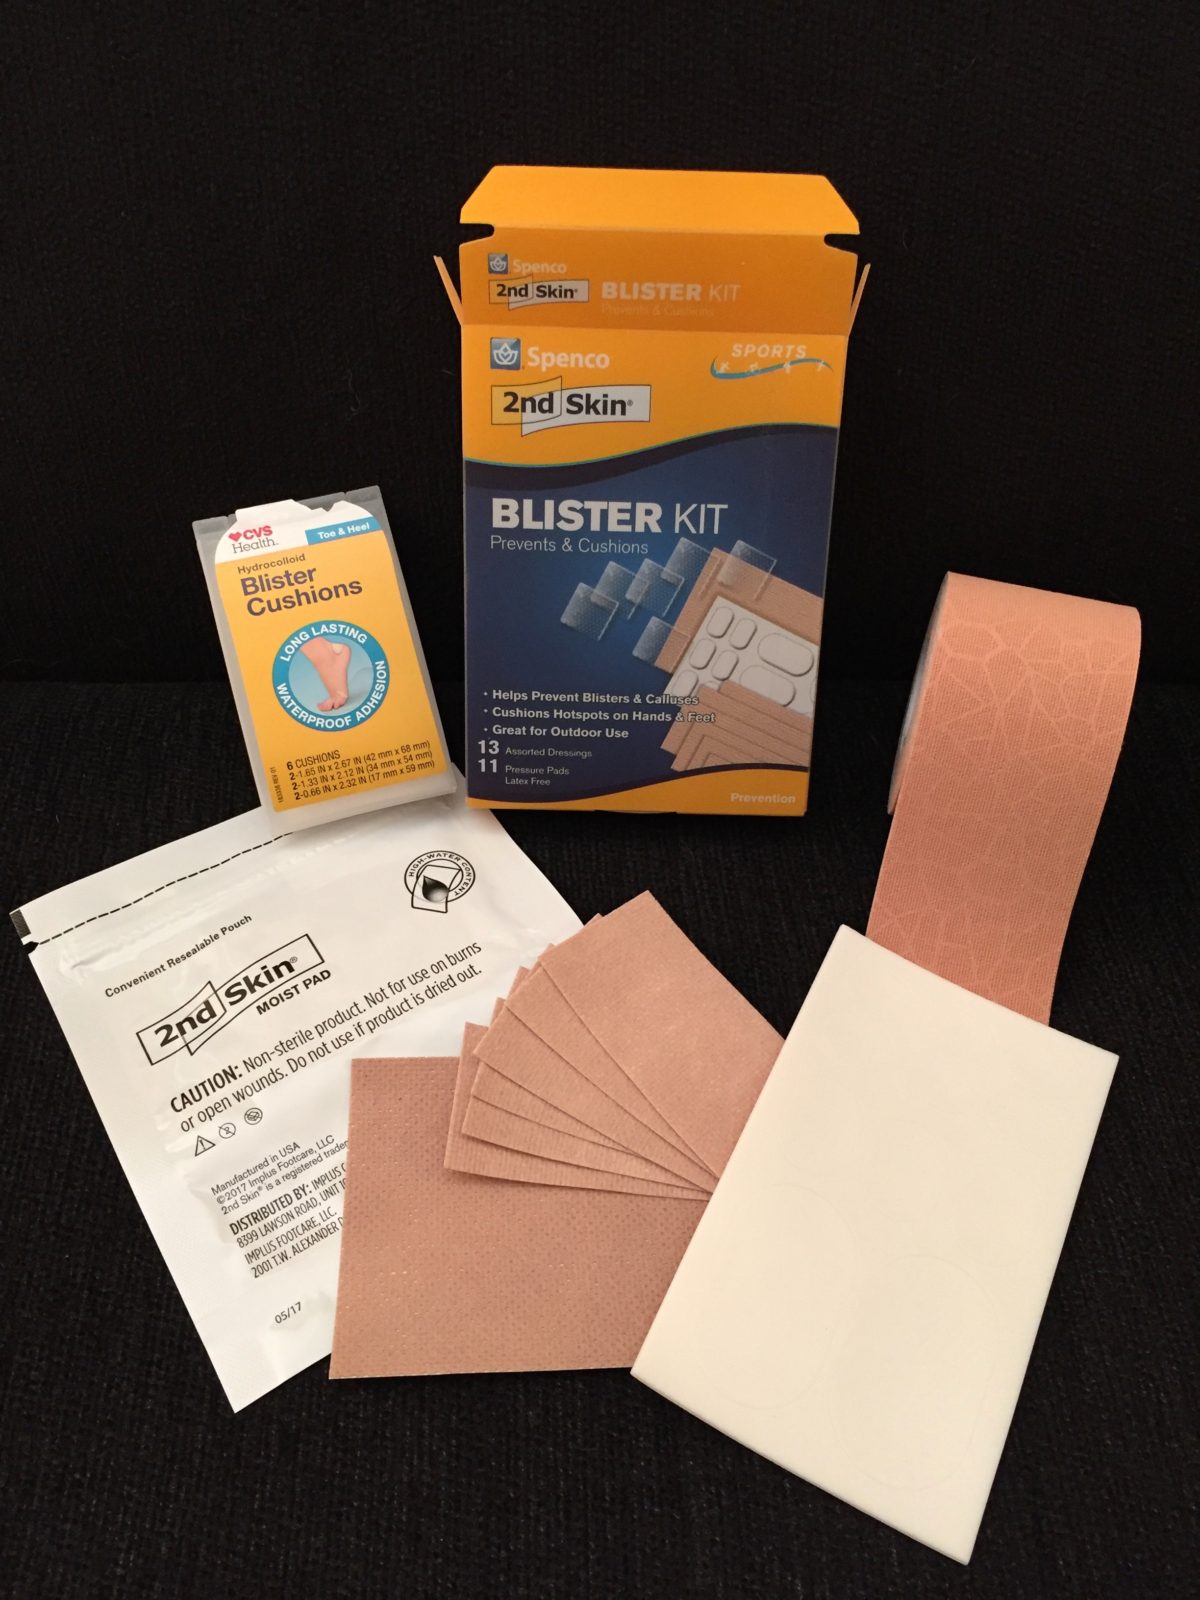 Basic Blister Care Part 3: Treating a Blister